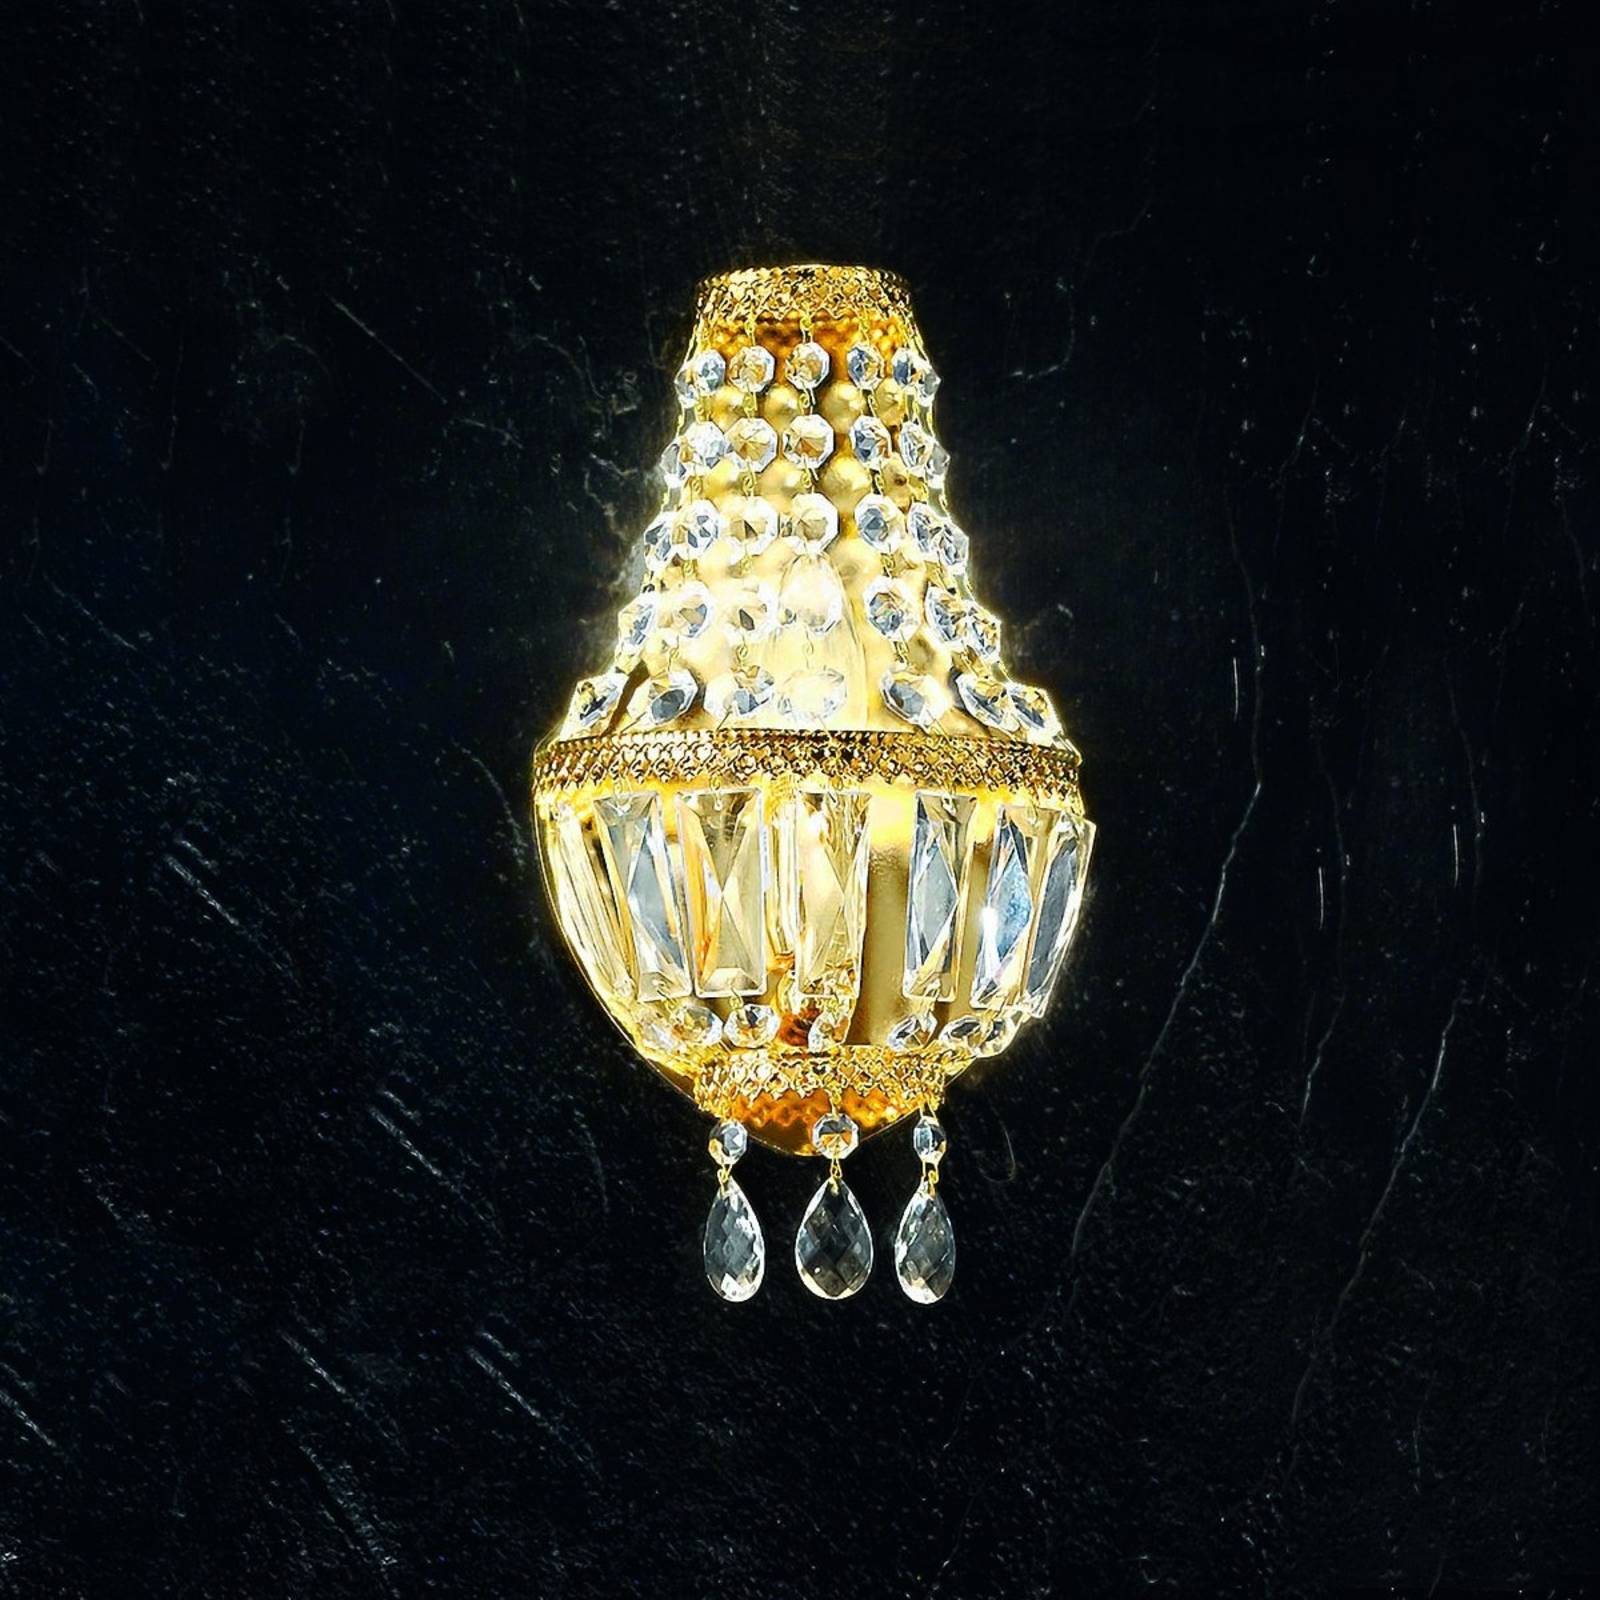 Wall light Cupola, 24 carat gold-plated